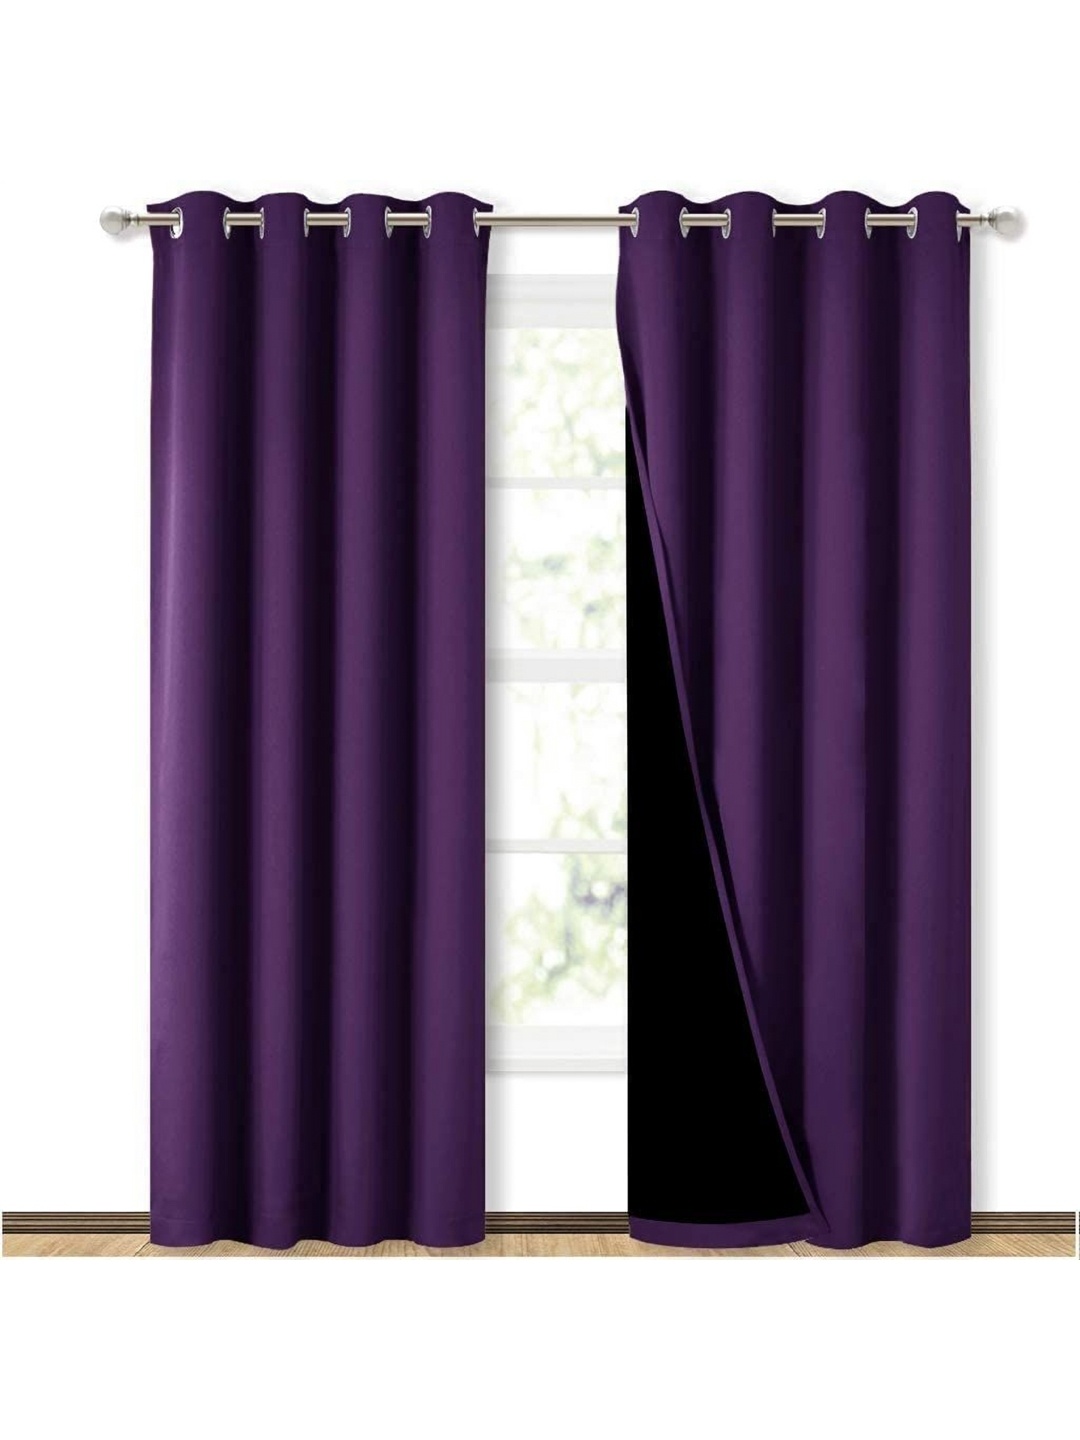 

BFAM Purple Black Out Window Curtain